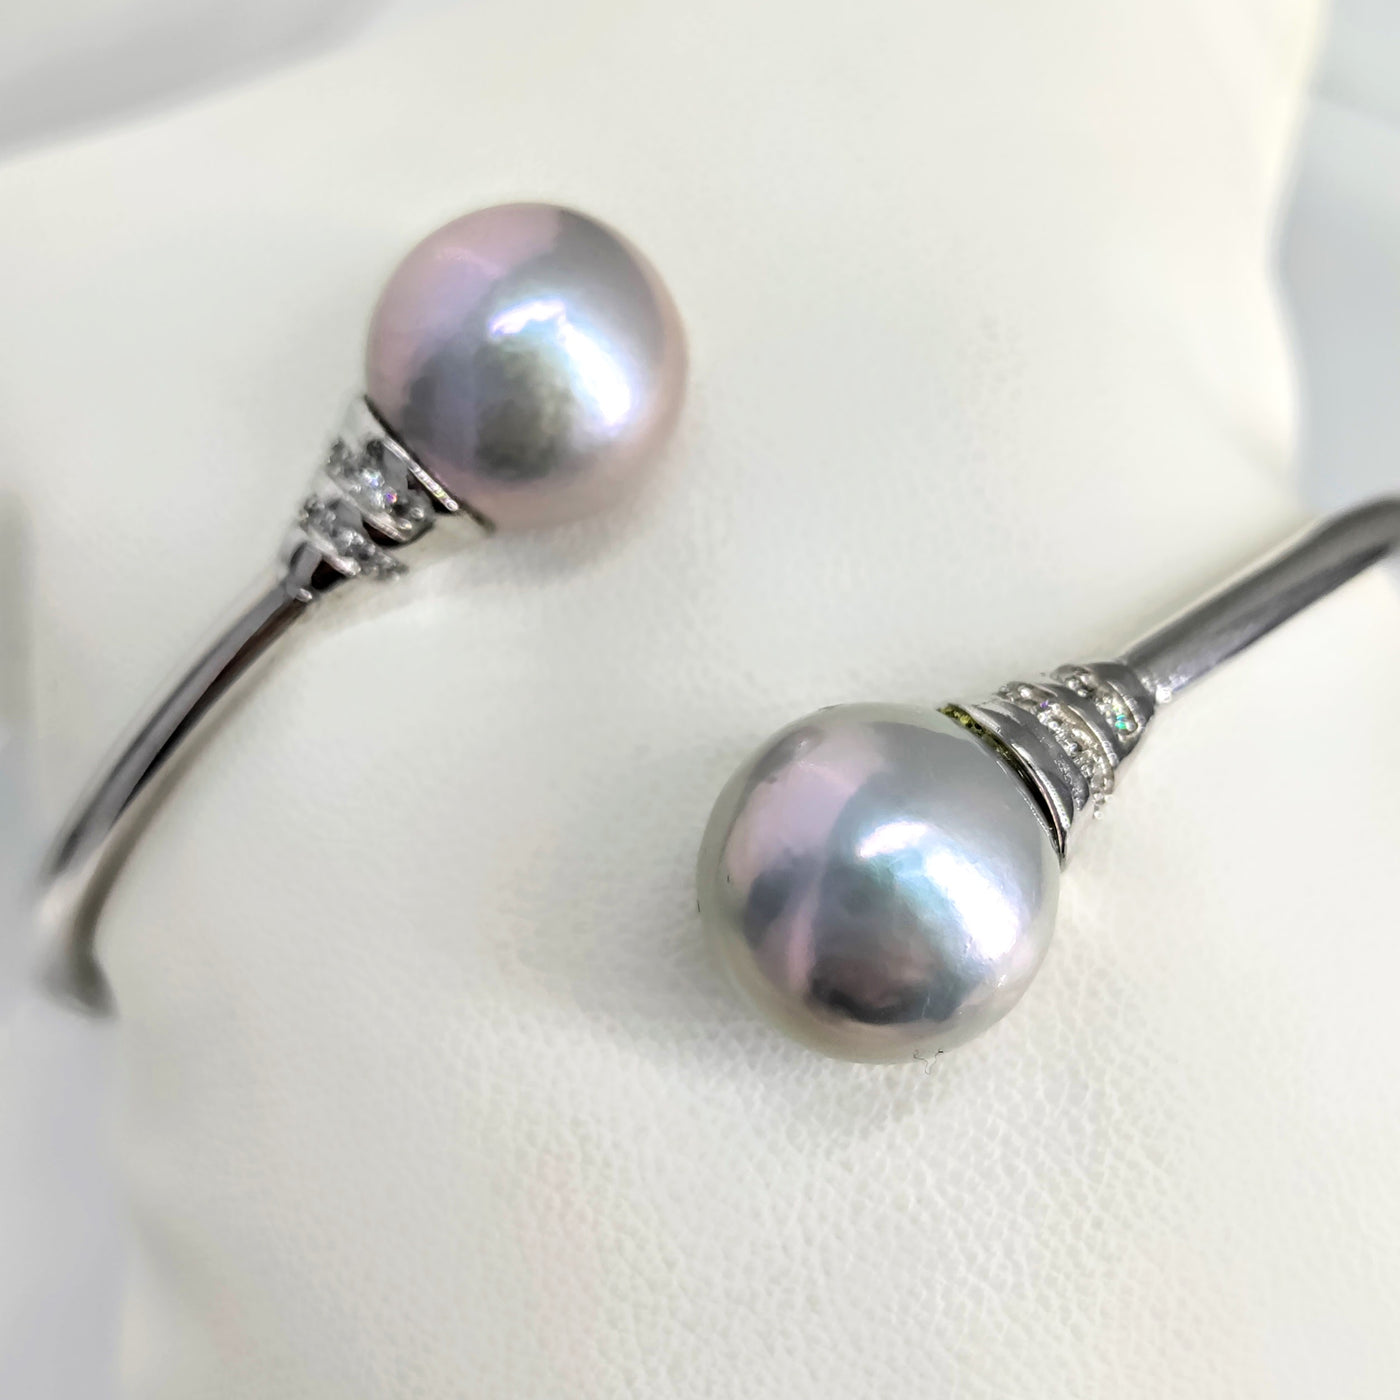 "Double Bubble" Hinged Cuff Bracelet - 13mm Edison Pearls, Topaz, Sterling